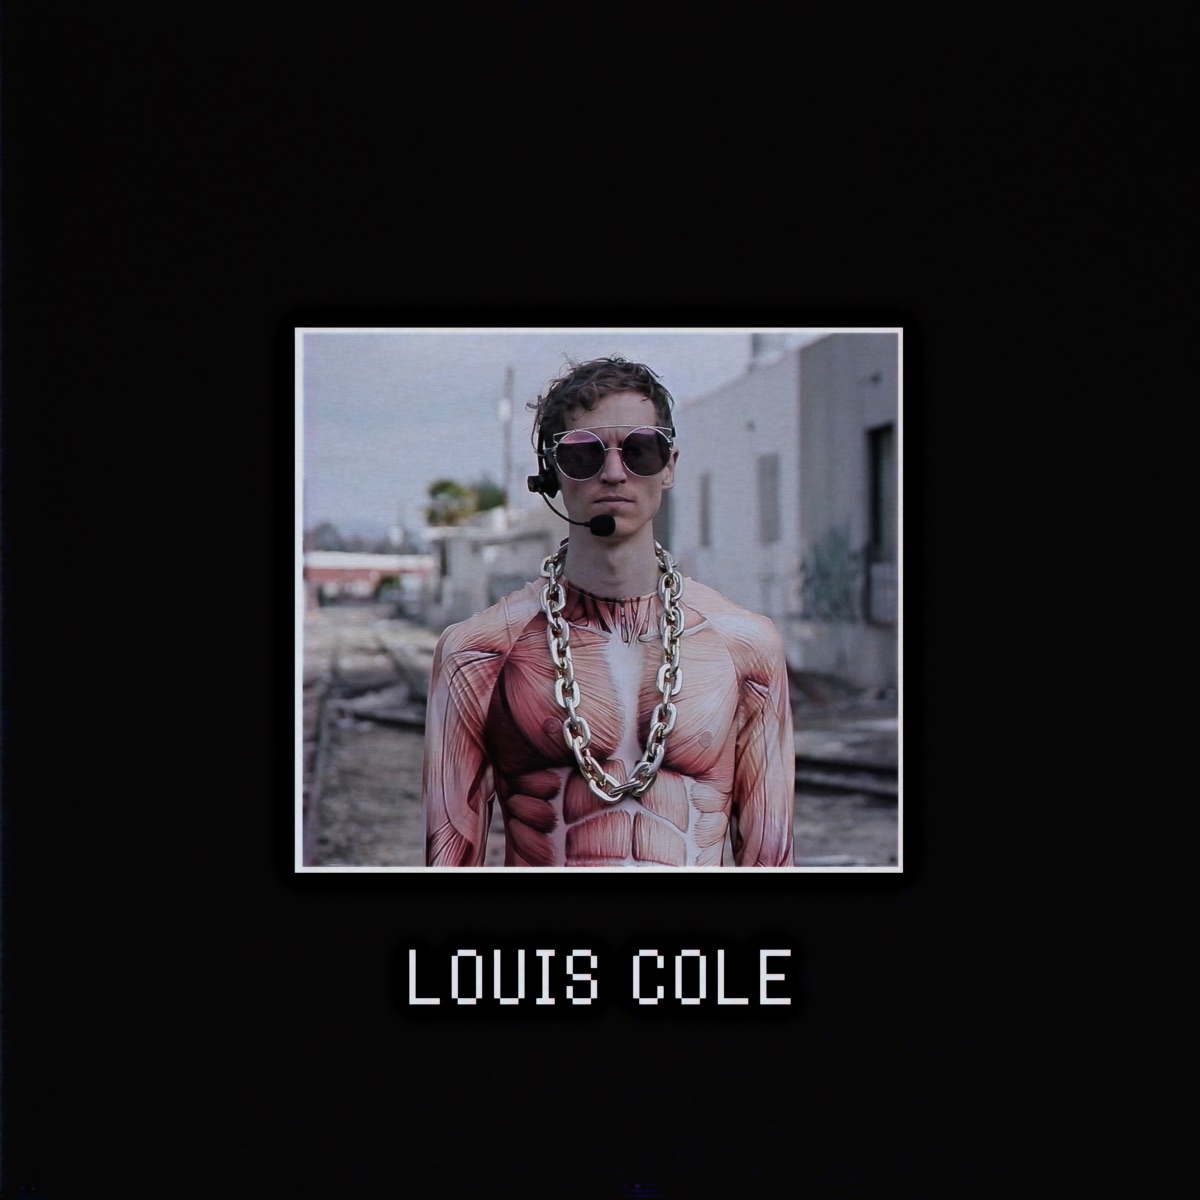 Time  Louis cole